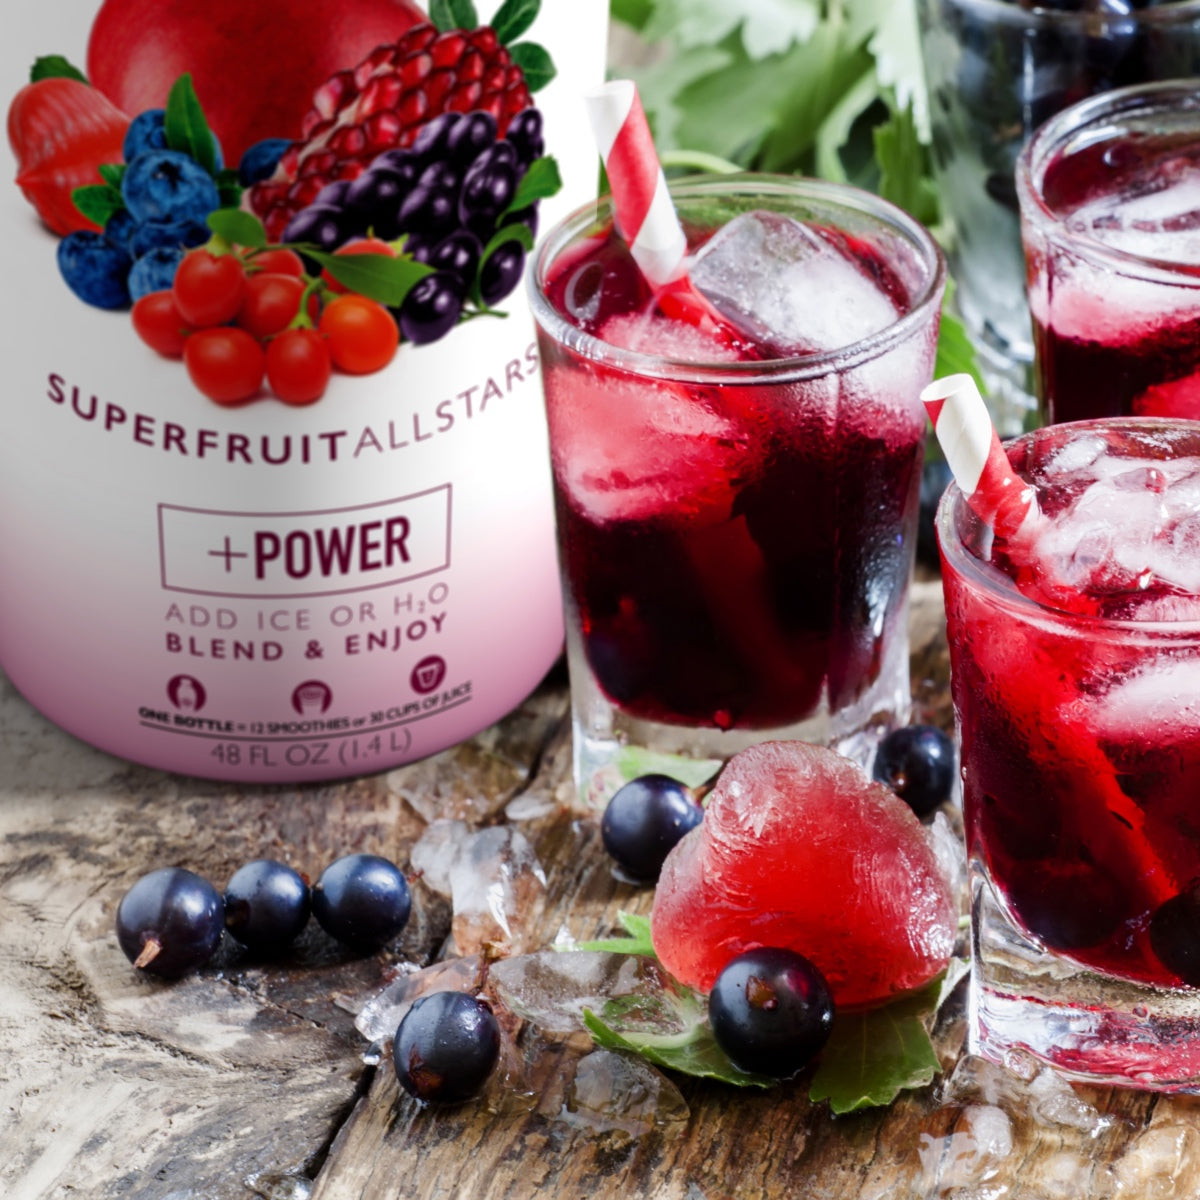 SmartFruit - 100% Real Fruit Puree: 48 fl. oz. Bottle: Superfruit All Stars